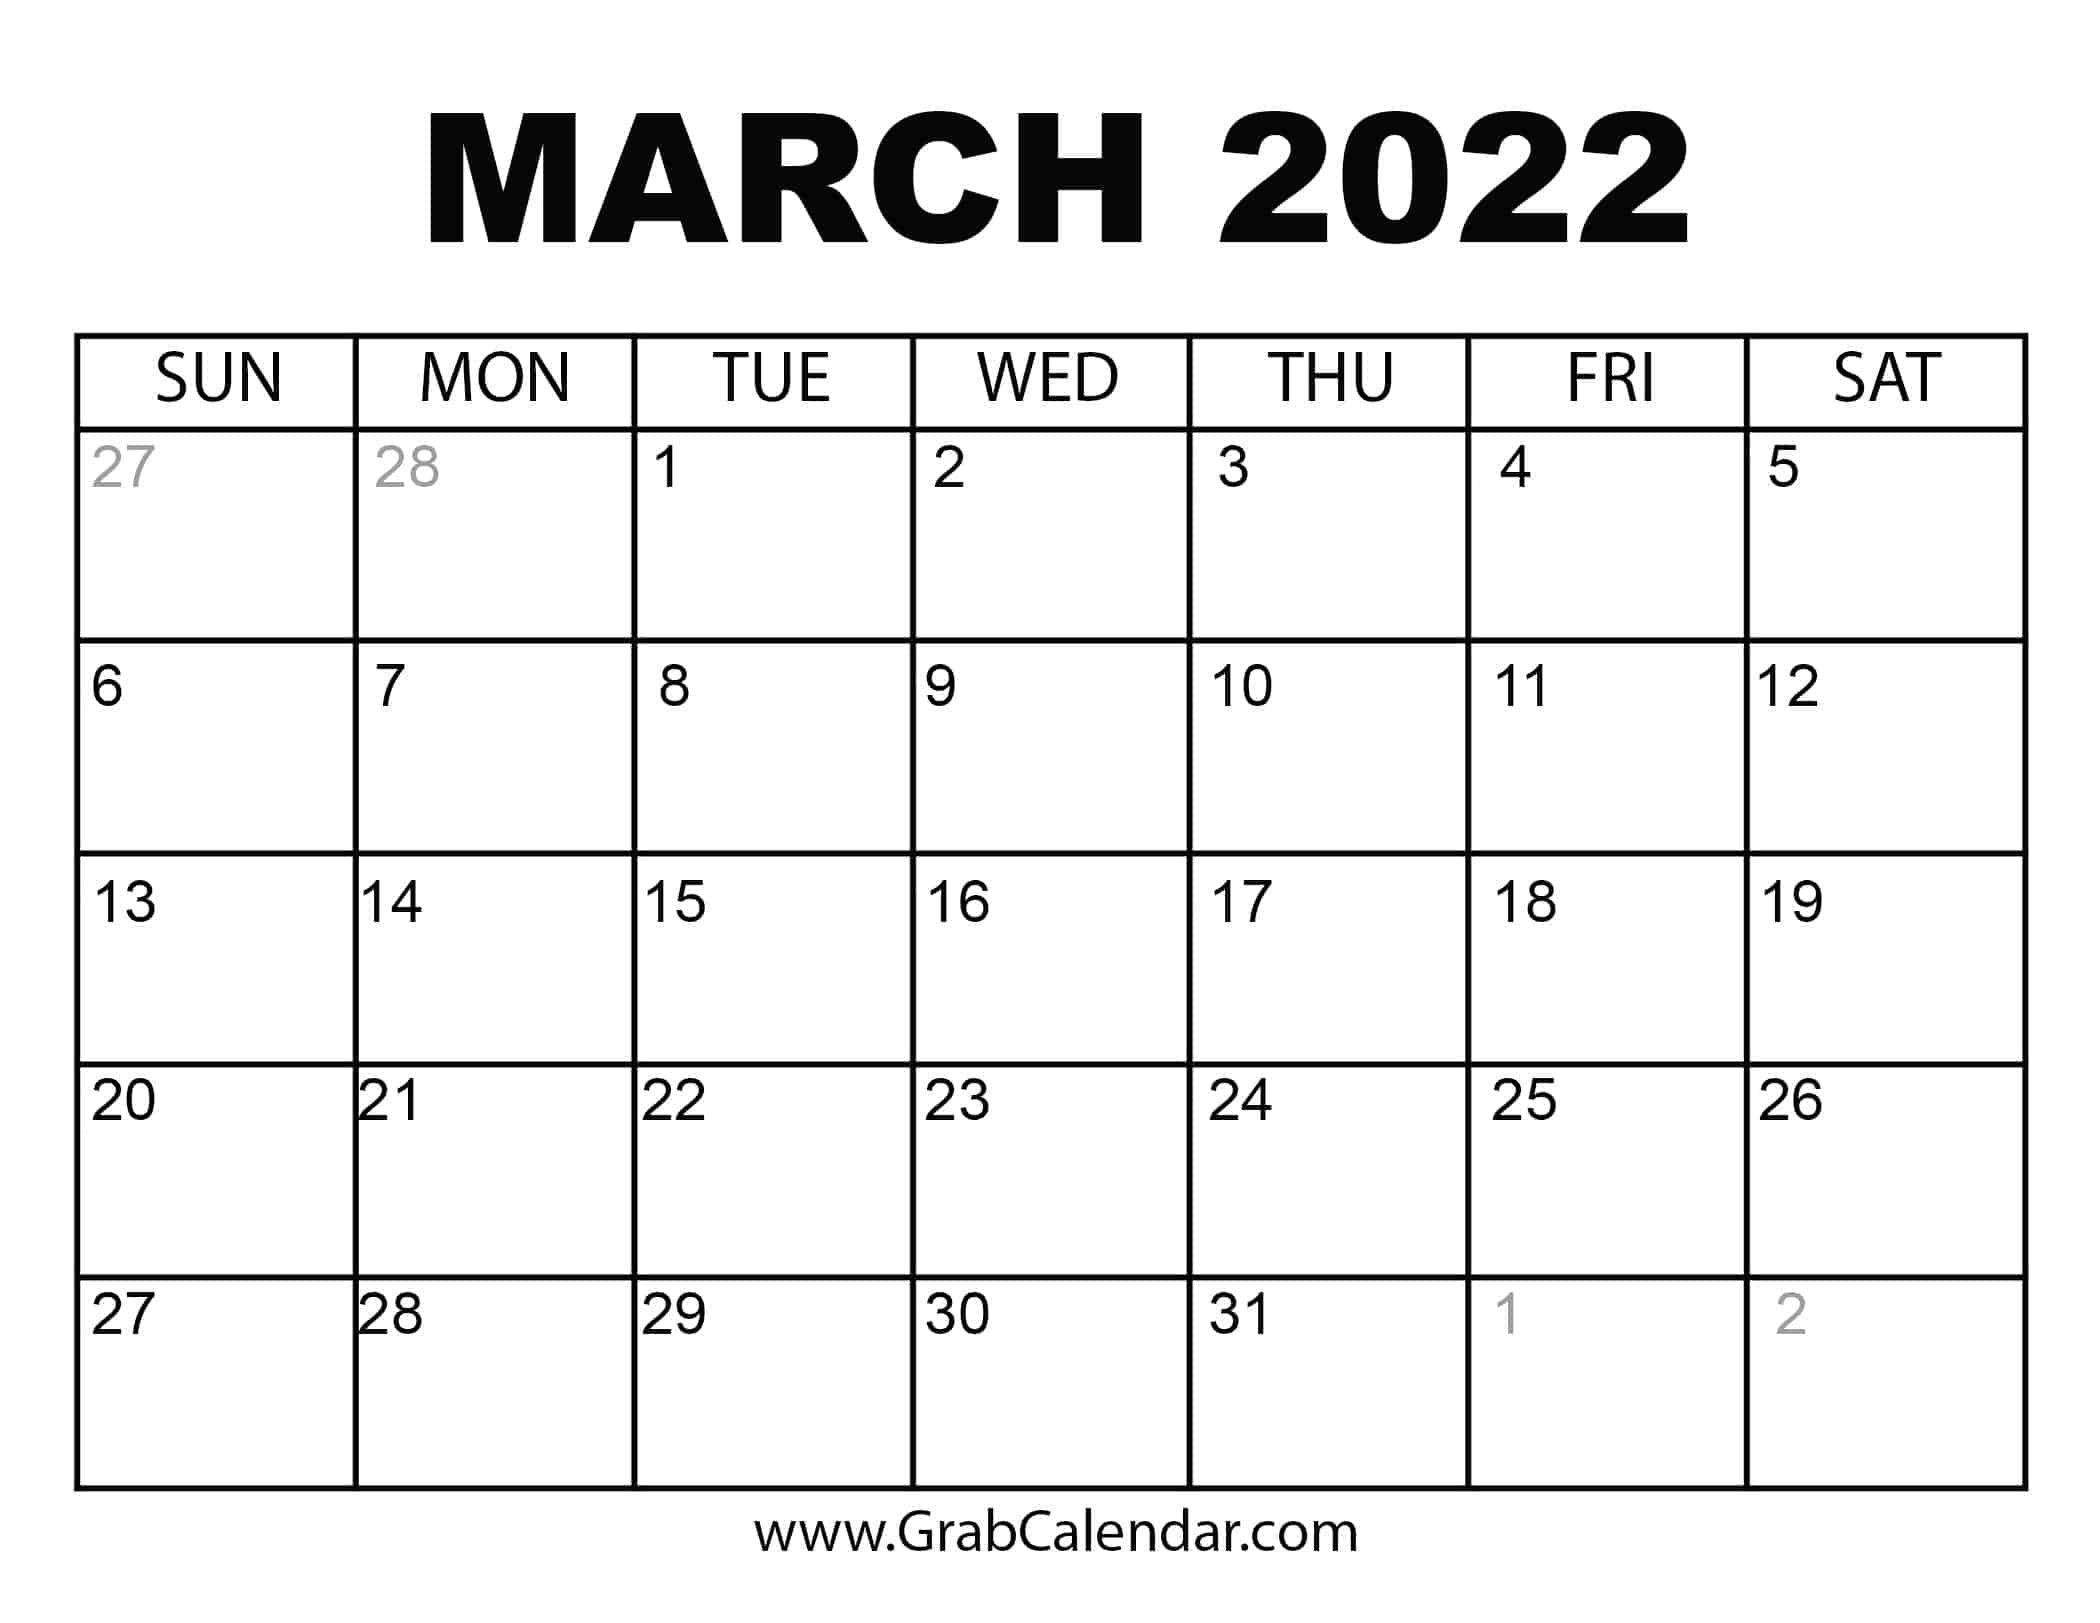 March 2022 Calendar With Holidays Printable March 2022 Calendar